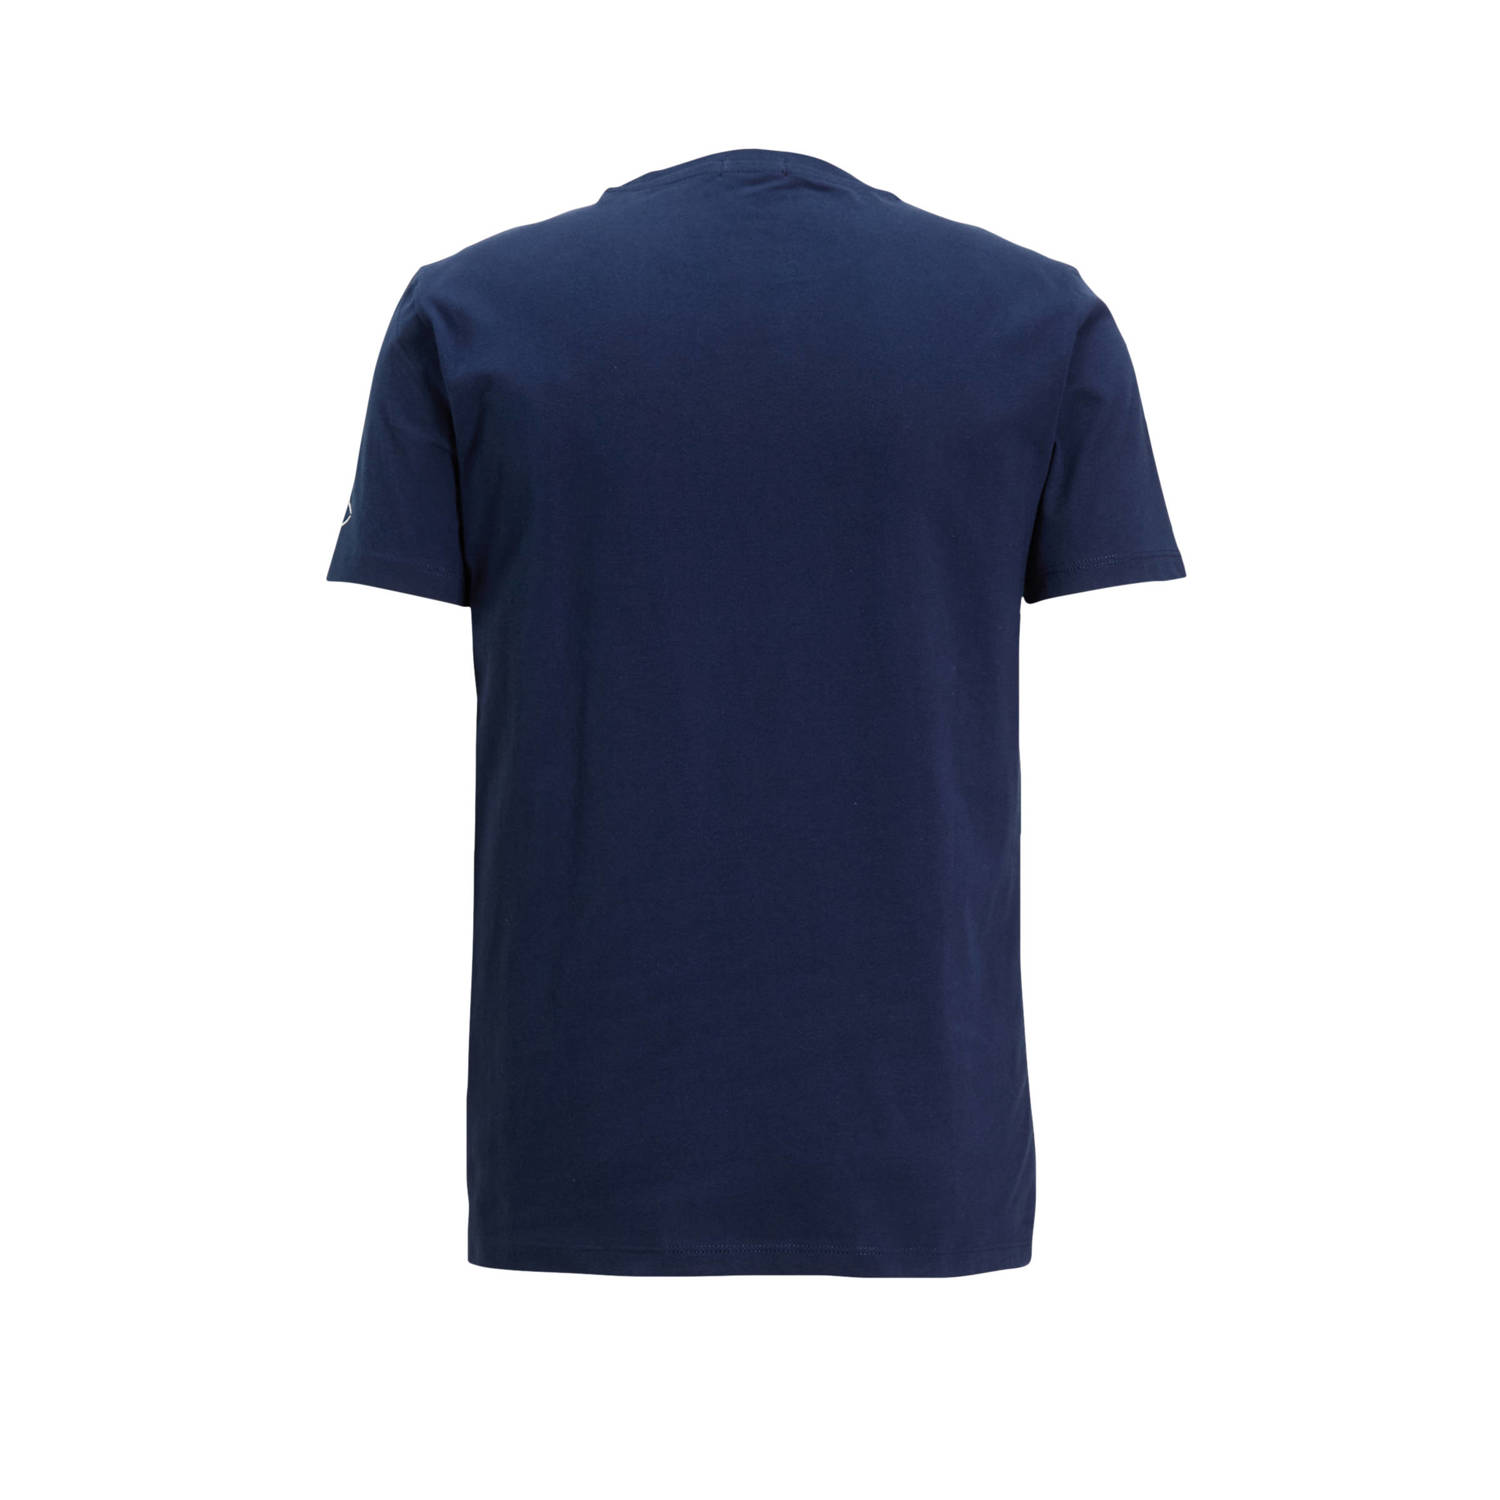 REPLAY T-shirt met printopdruk indigo blue